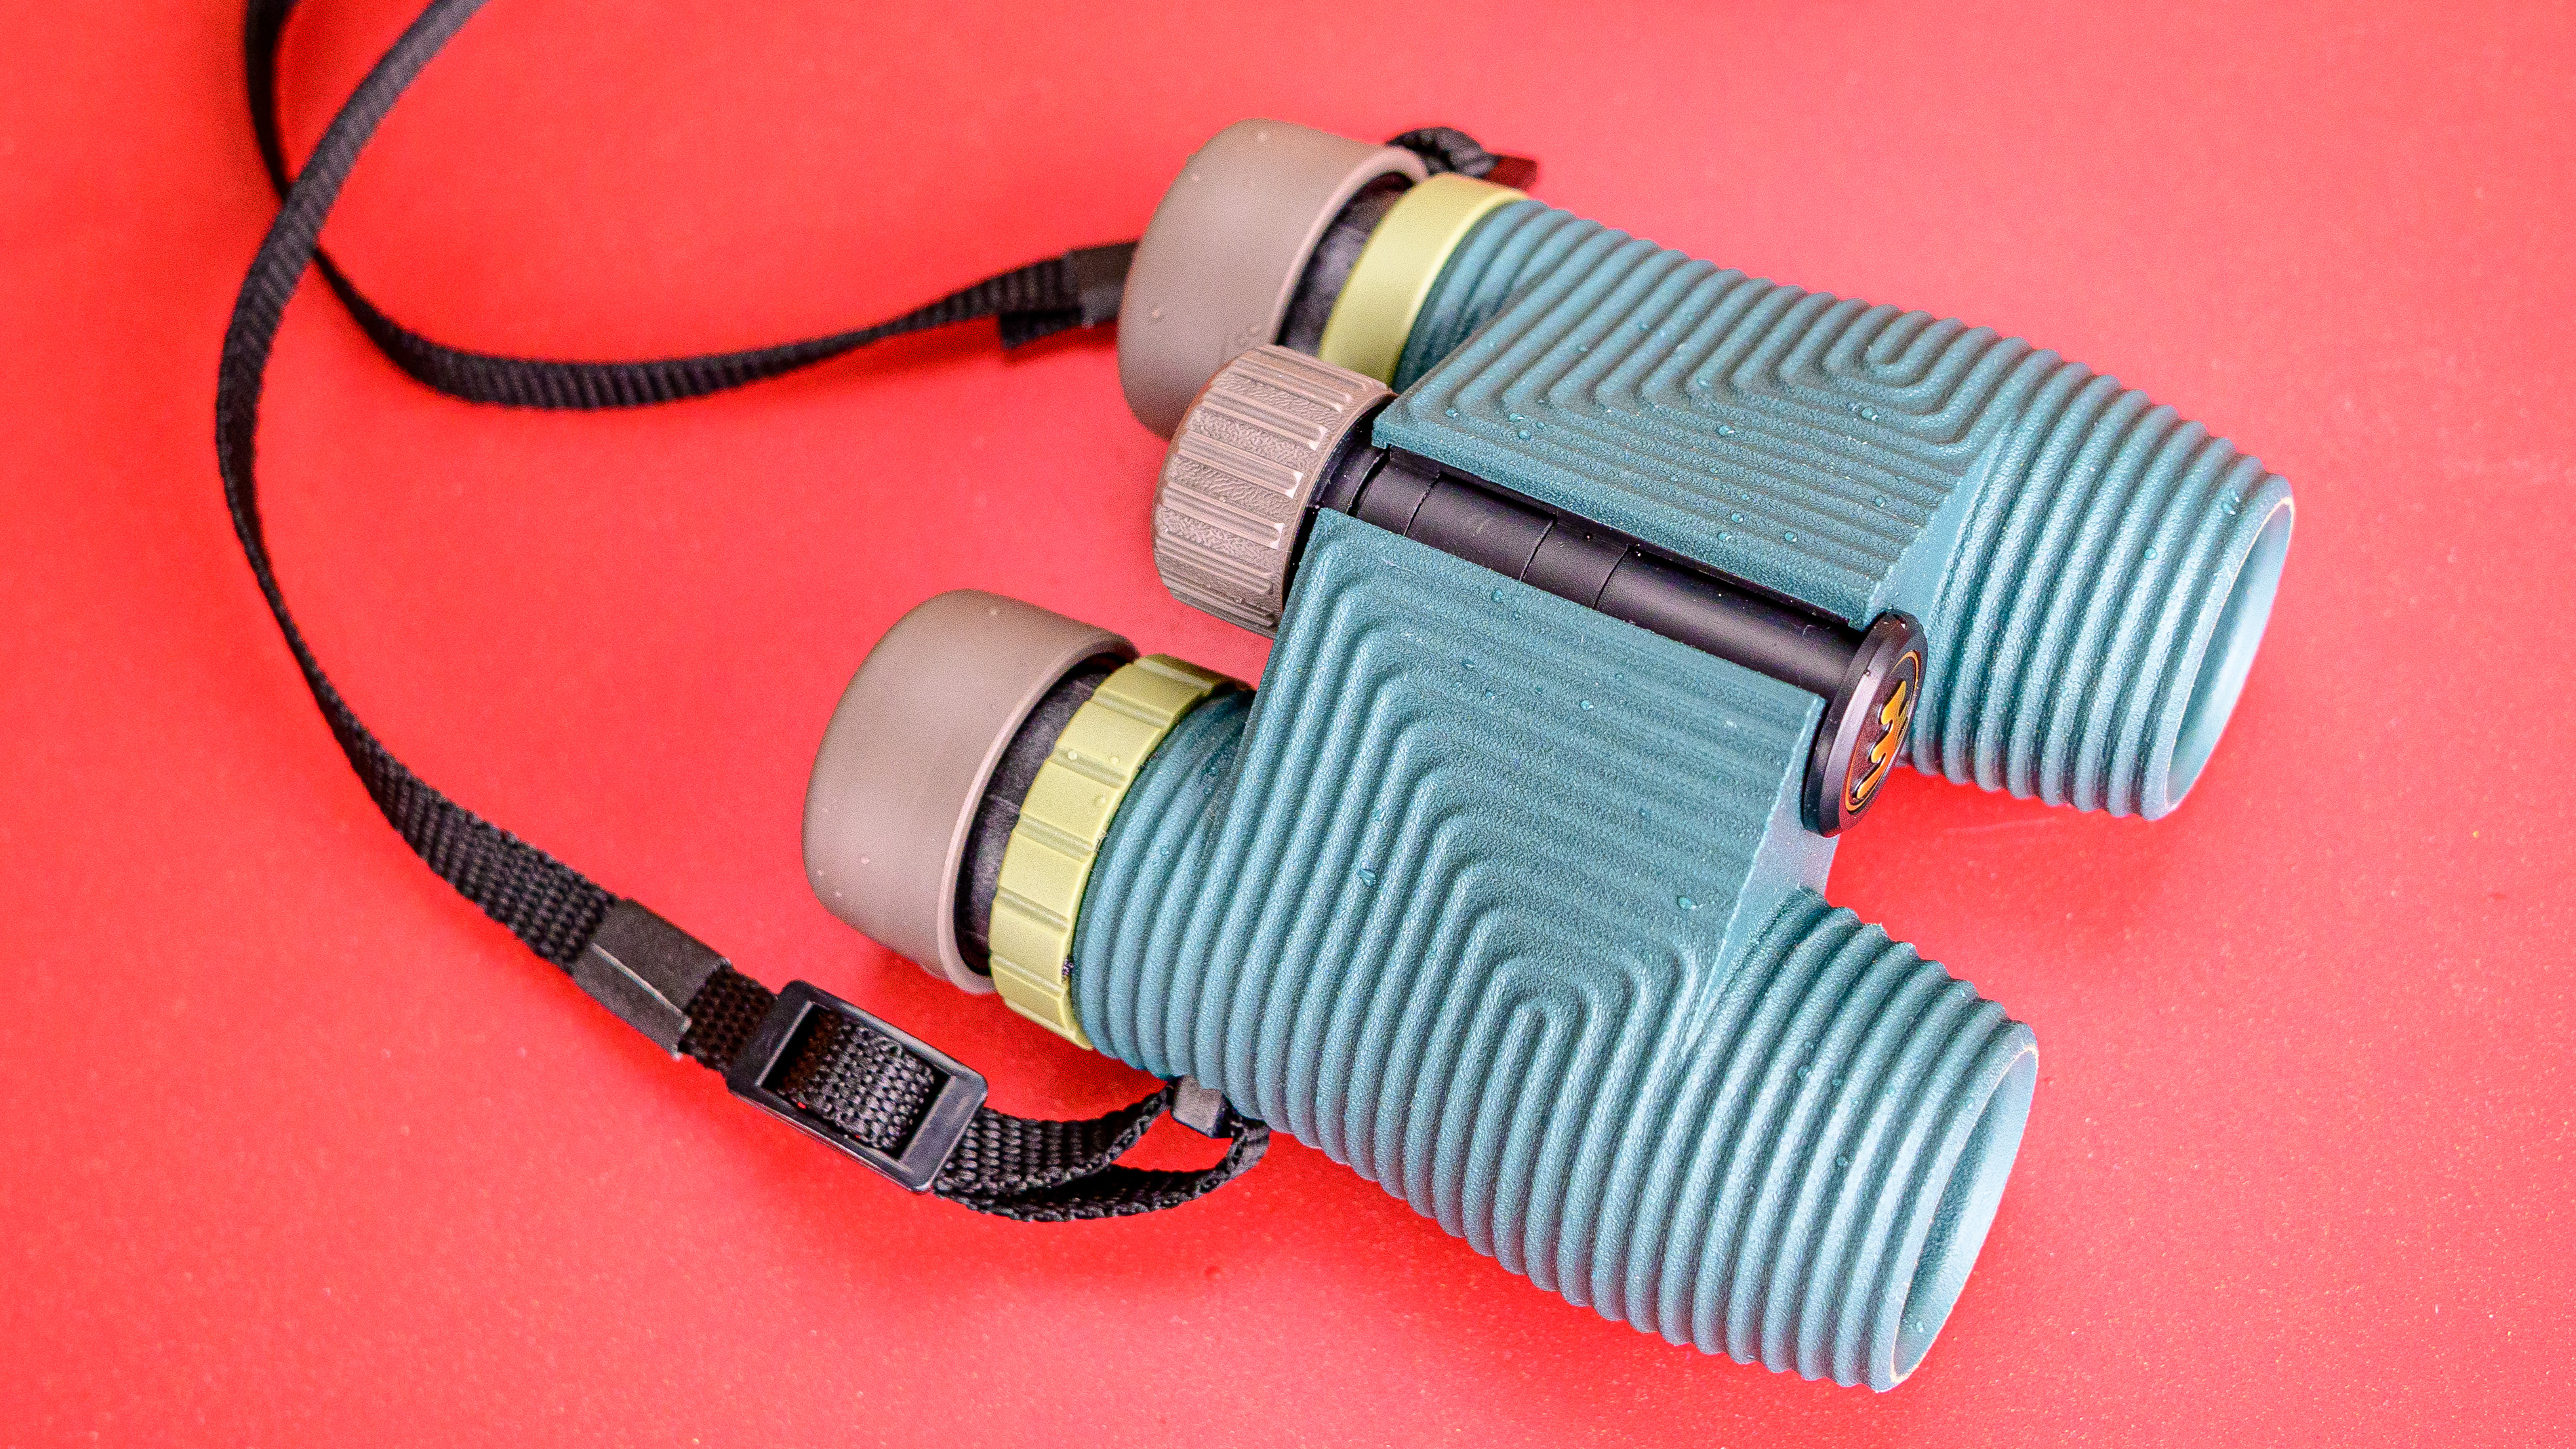 Nocs Standard Issue Binoculars.